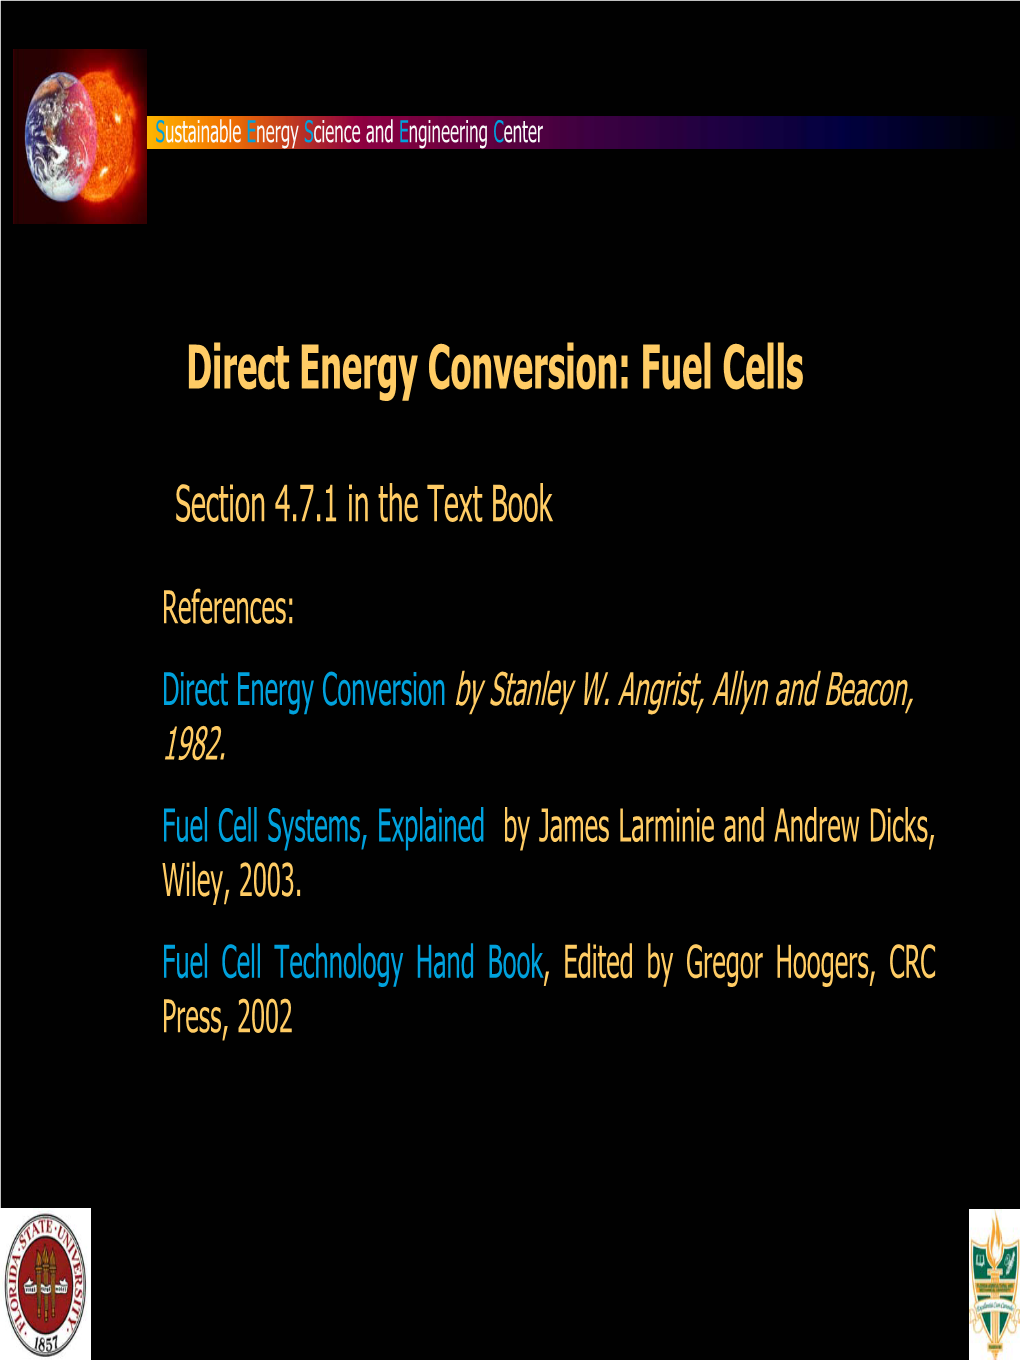 Direct Energy Conversion: Fuel Cells